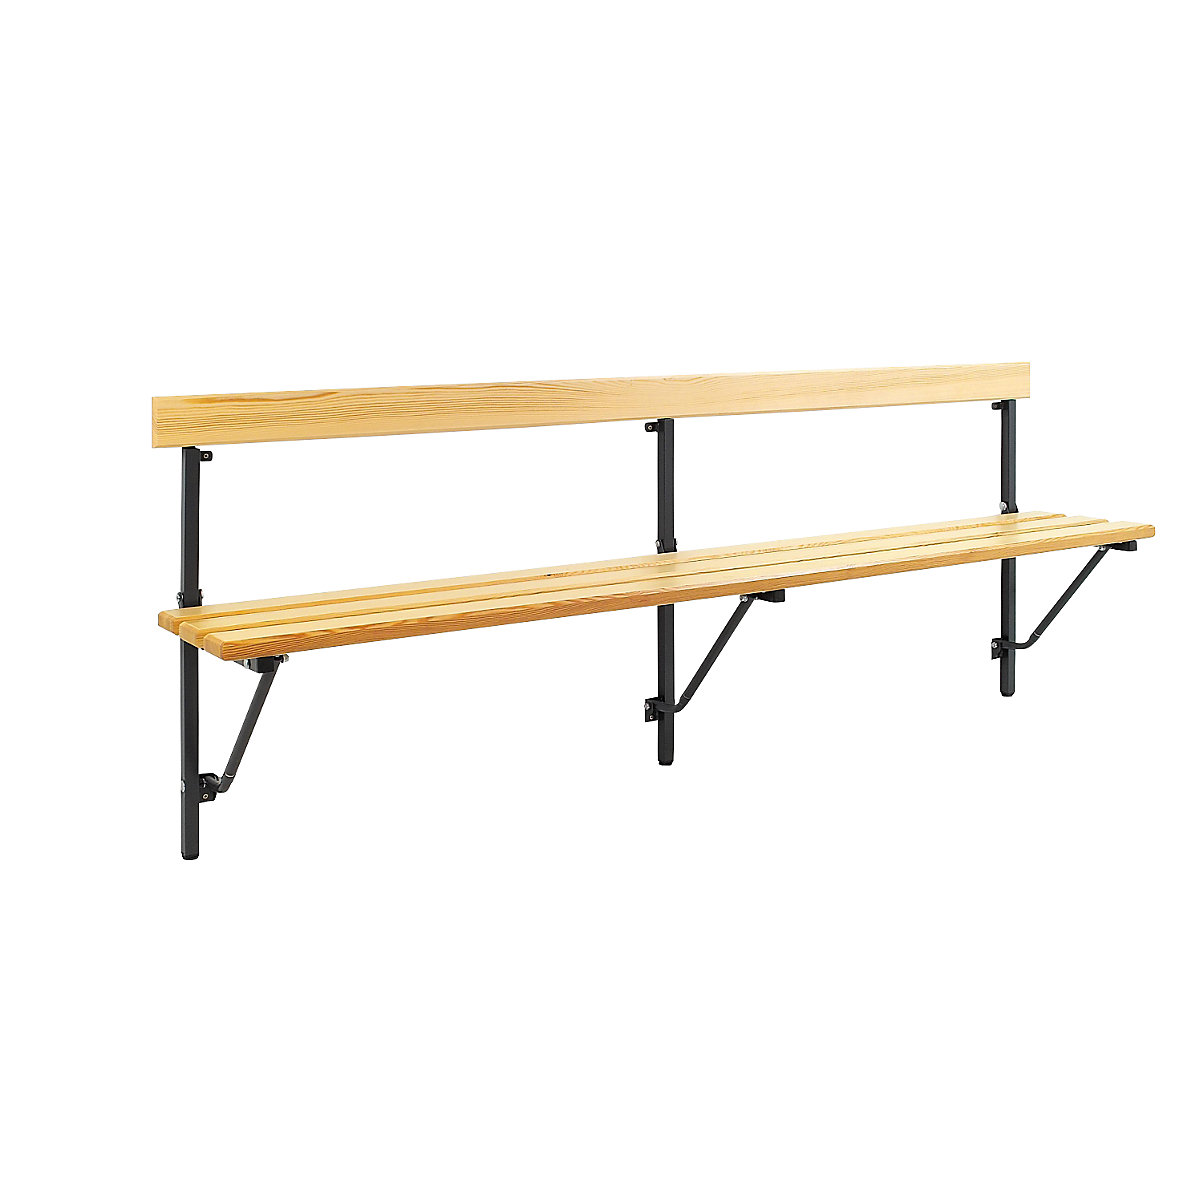 Folding wall-mounted bench – Sypro